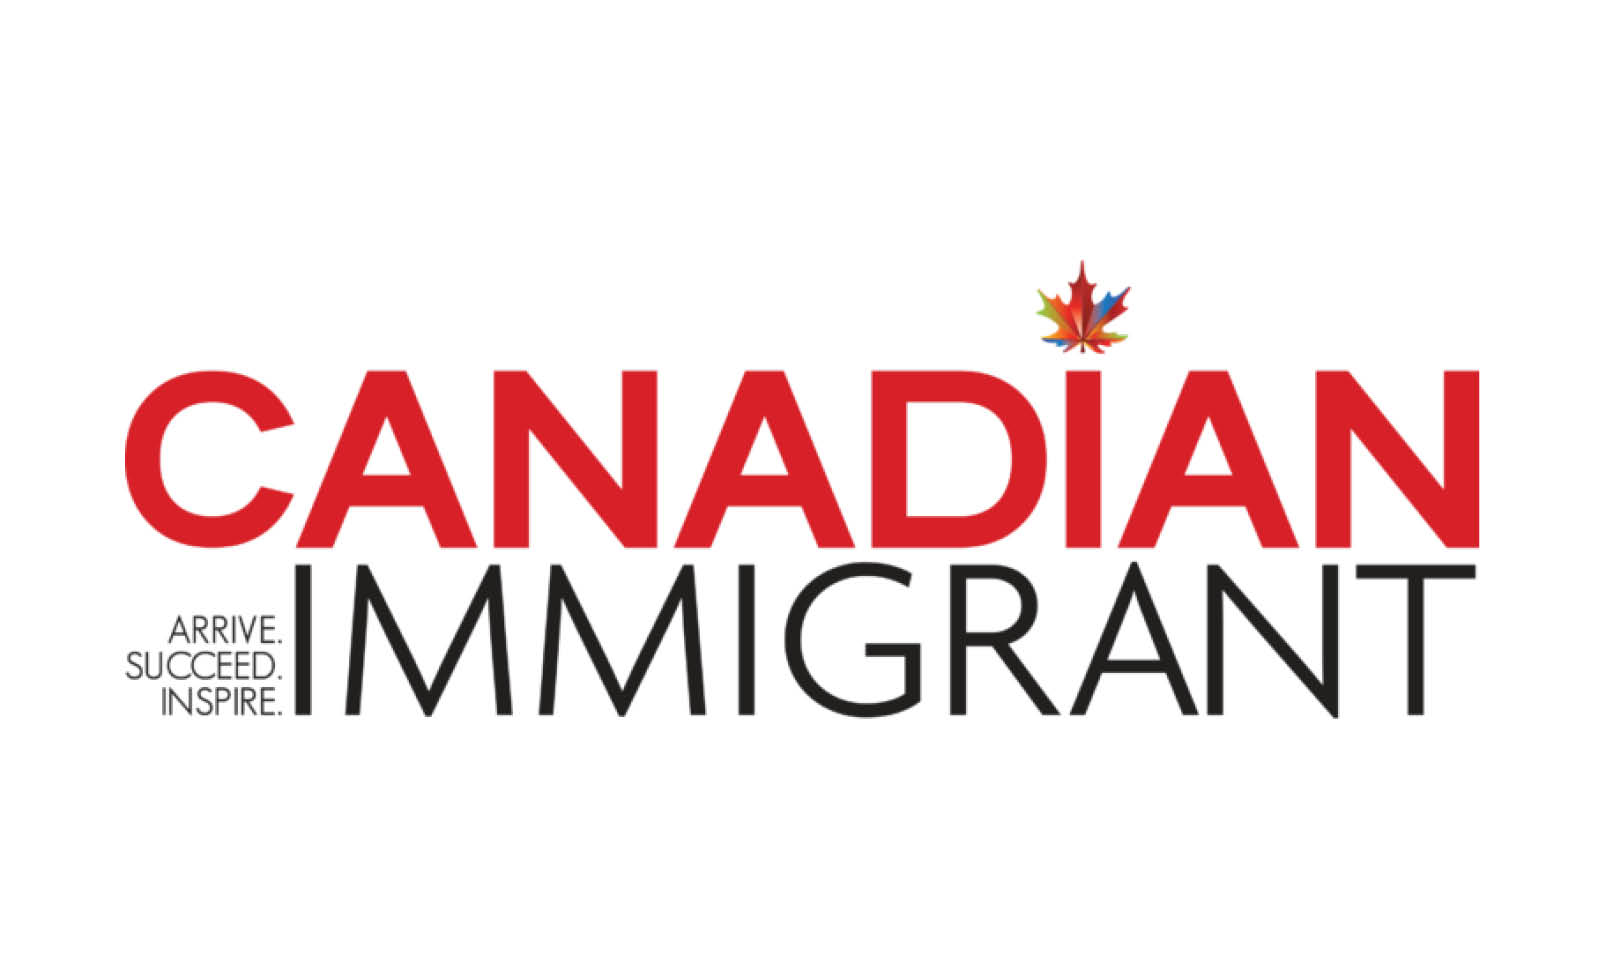 Canadian Immigrant